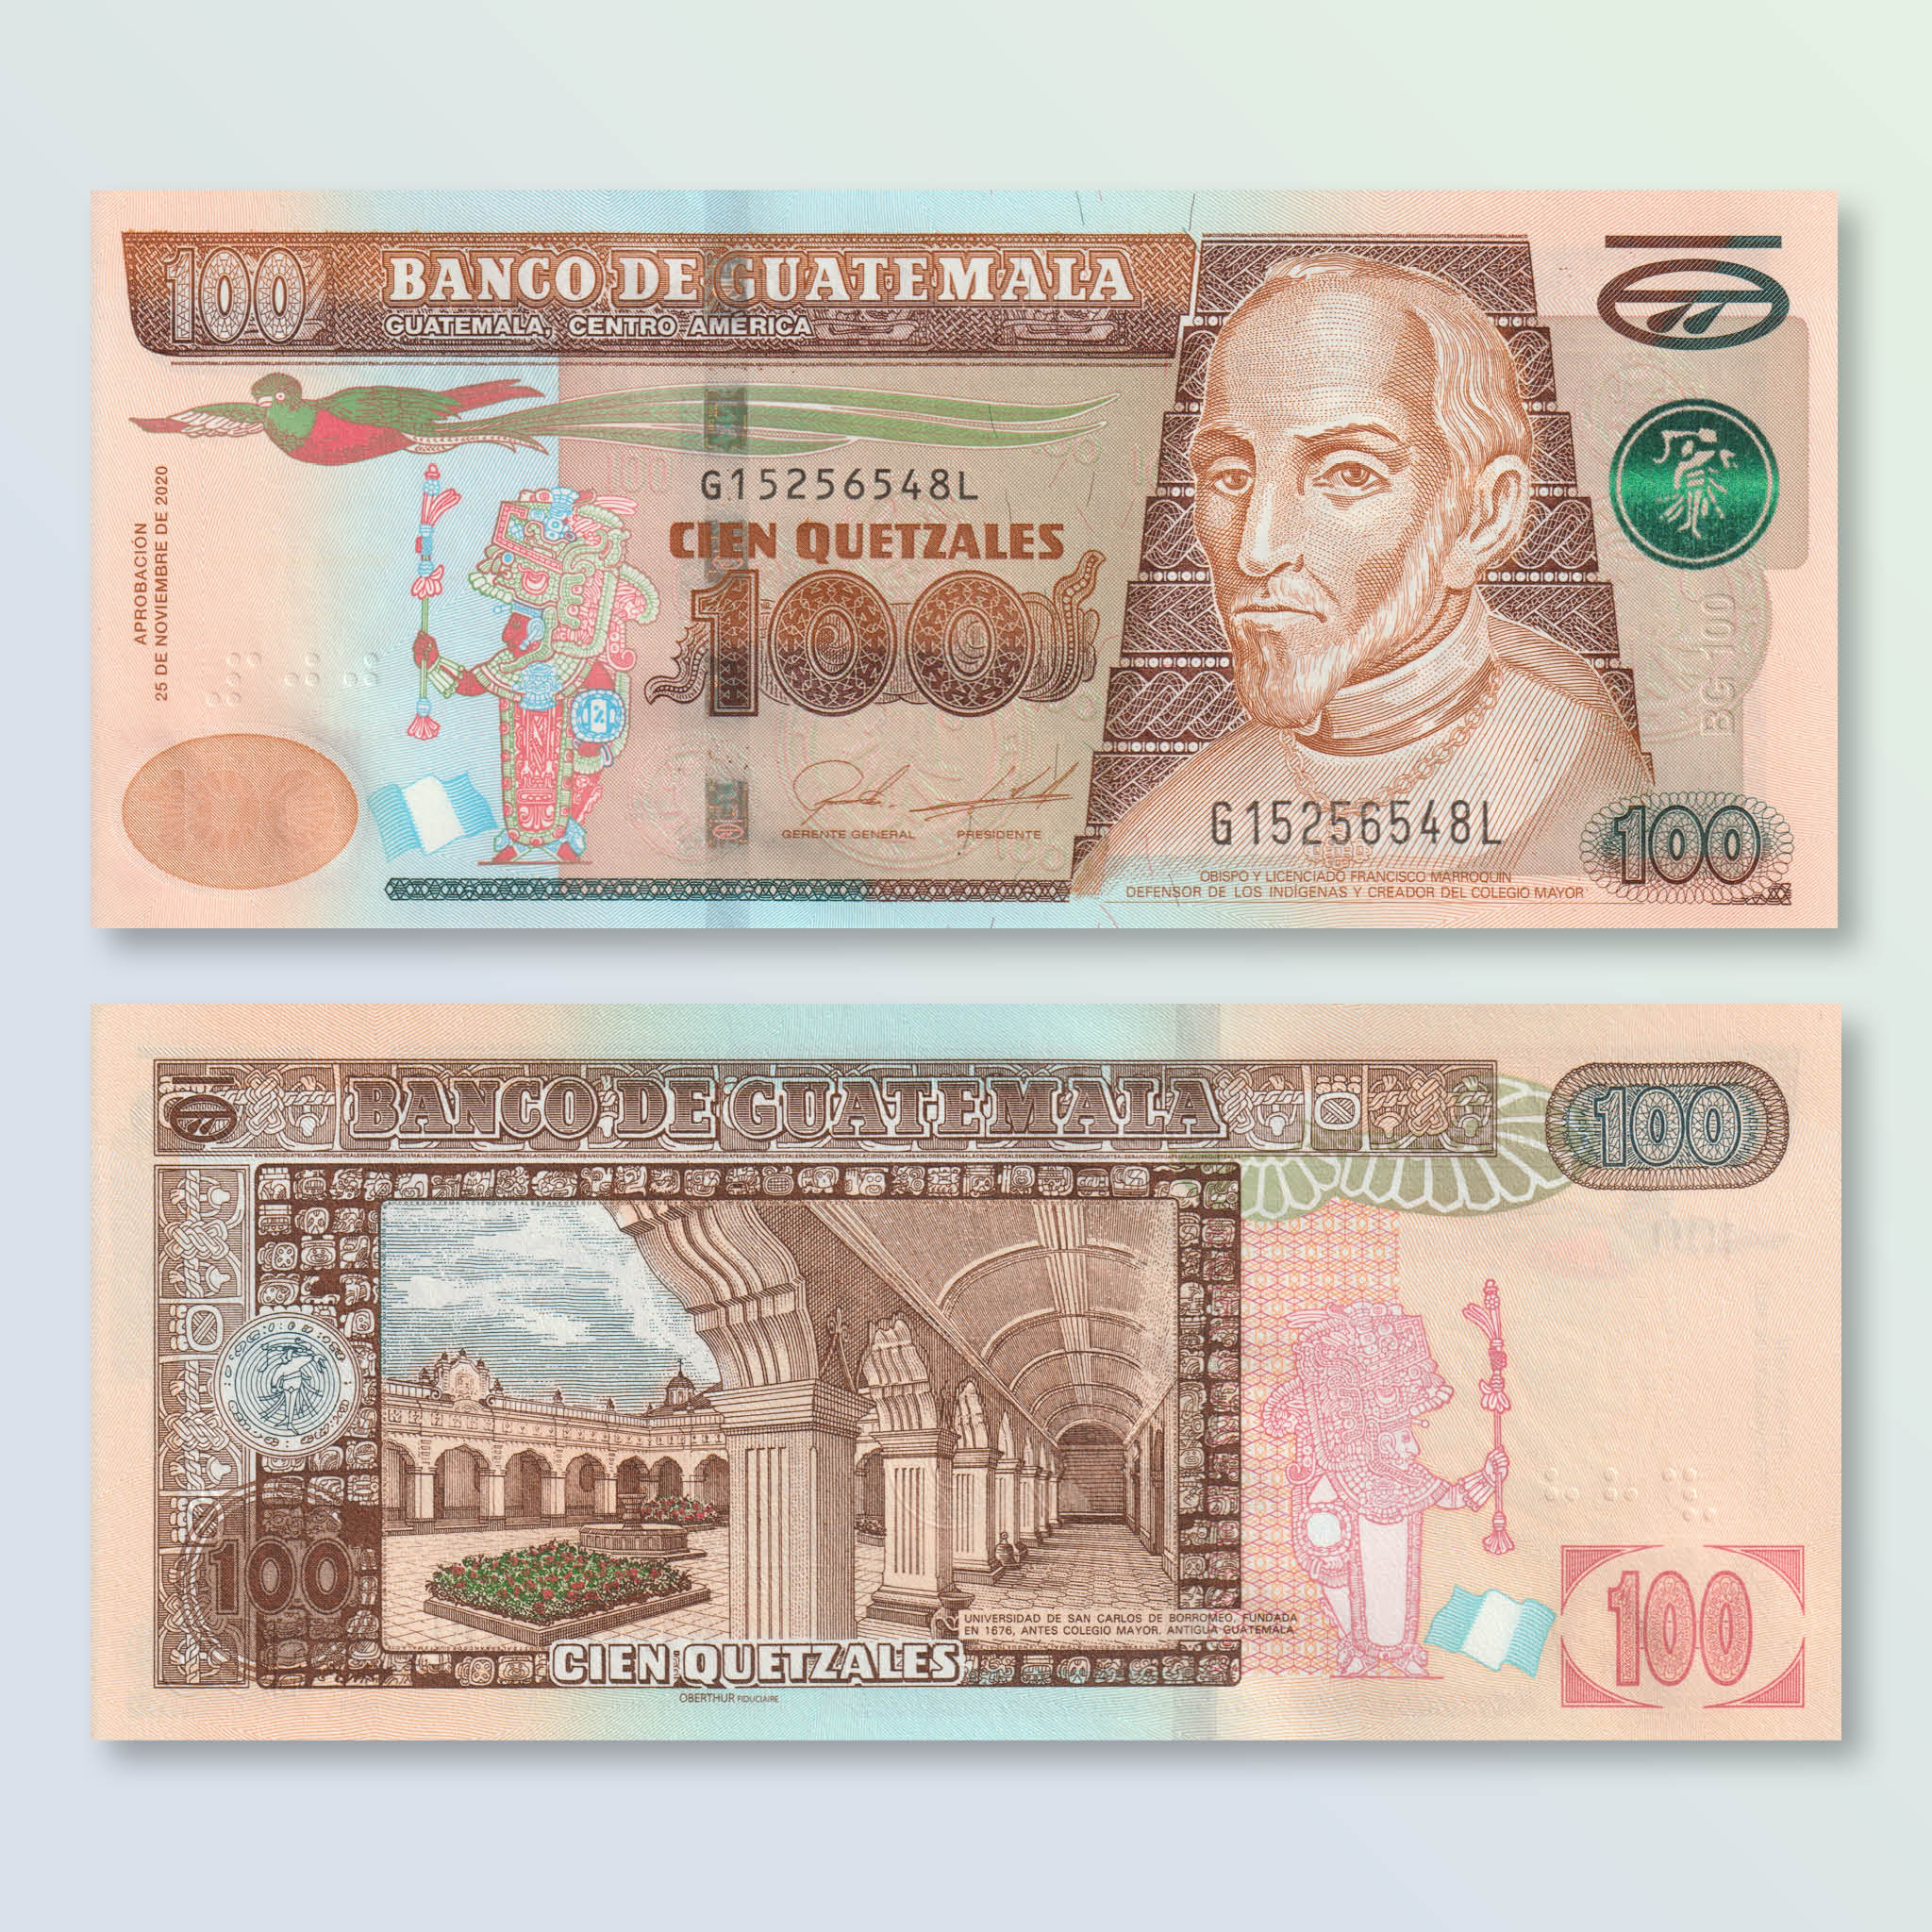 Guatemala 100 Quetzales, 2020, B601m, P126, UNC - Robert's World Money - World Banknotes